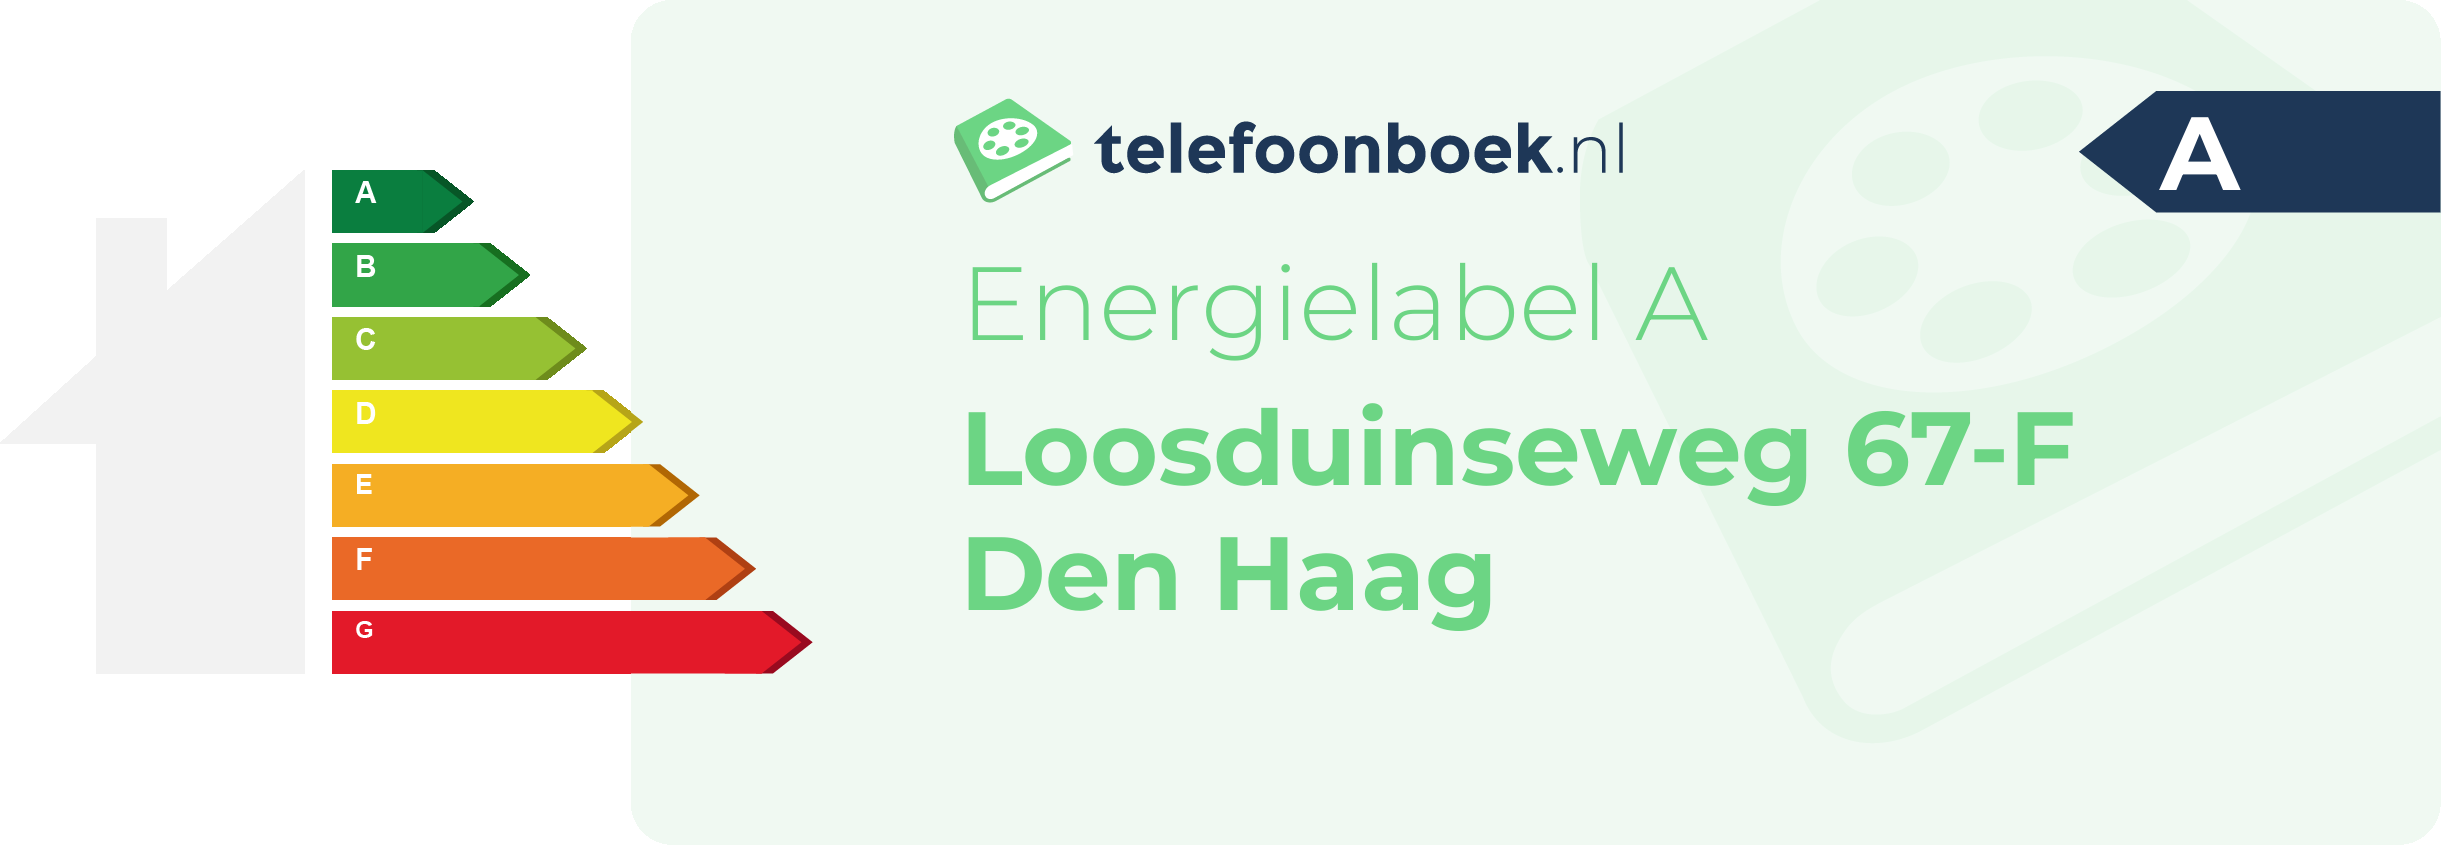 Energielabel Loosduinseweg 67-F Den Haag